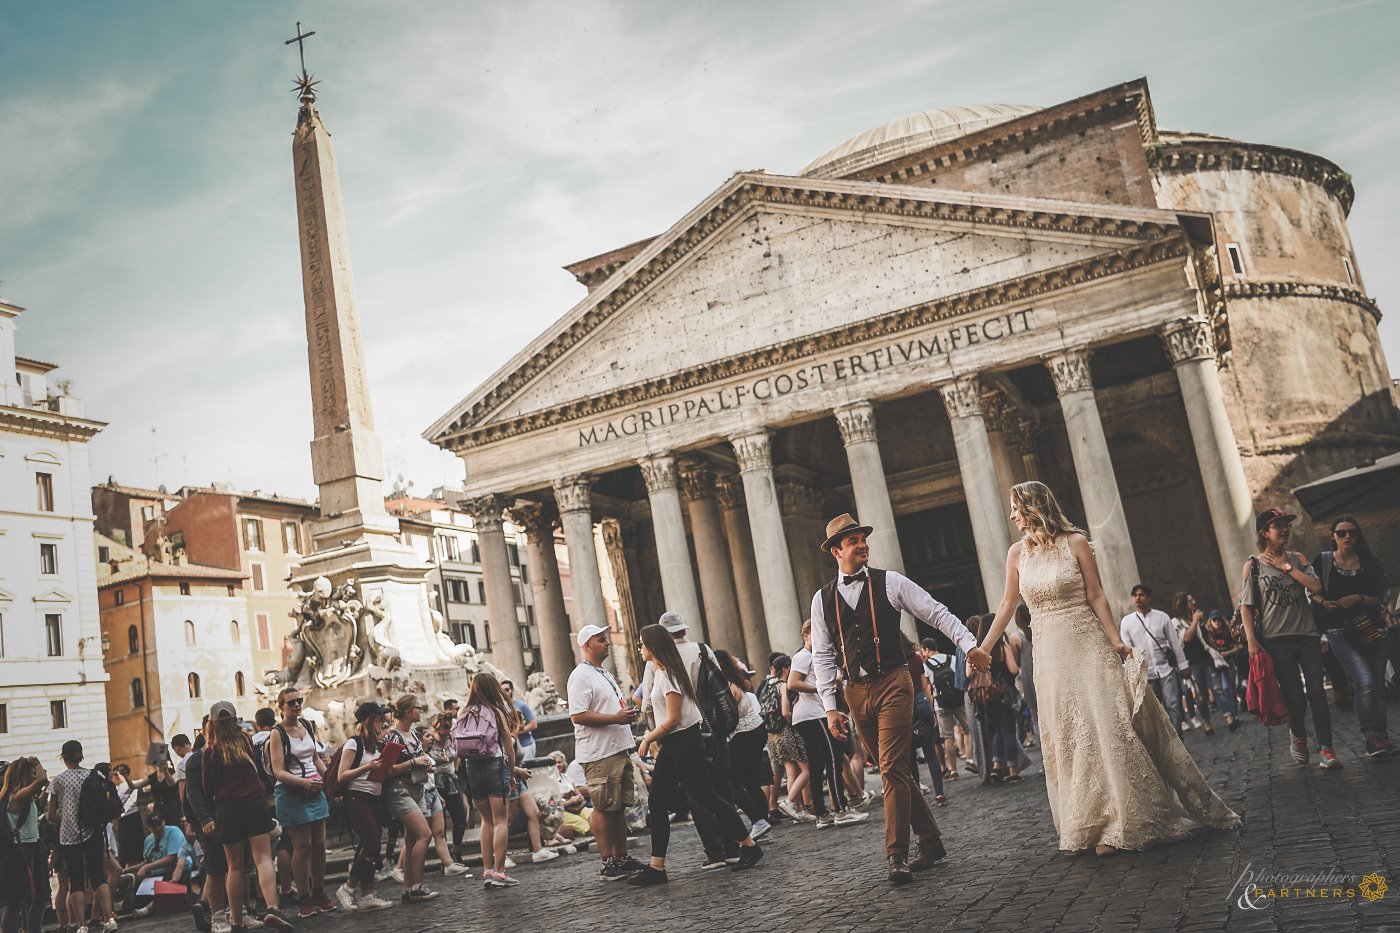 A walk through the historic center. The Pantheon!